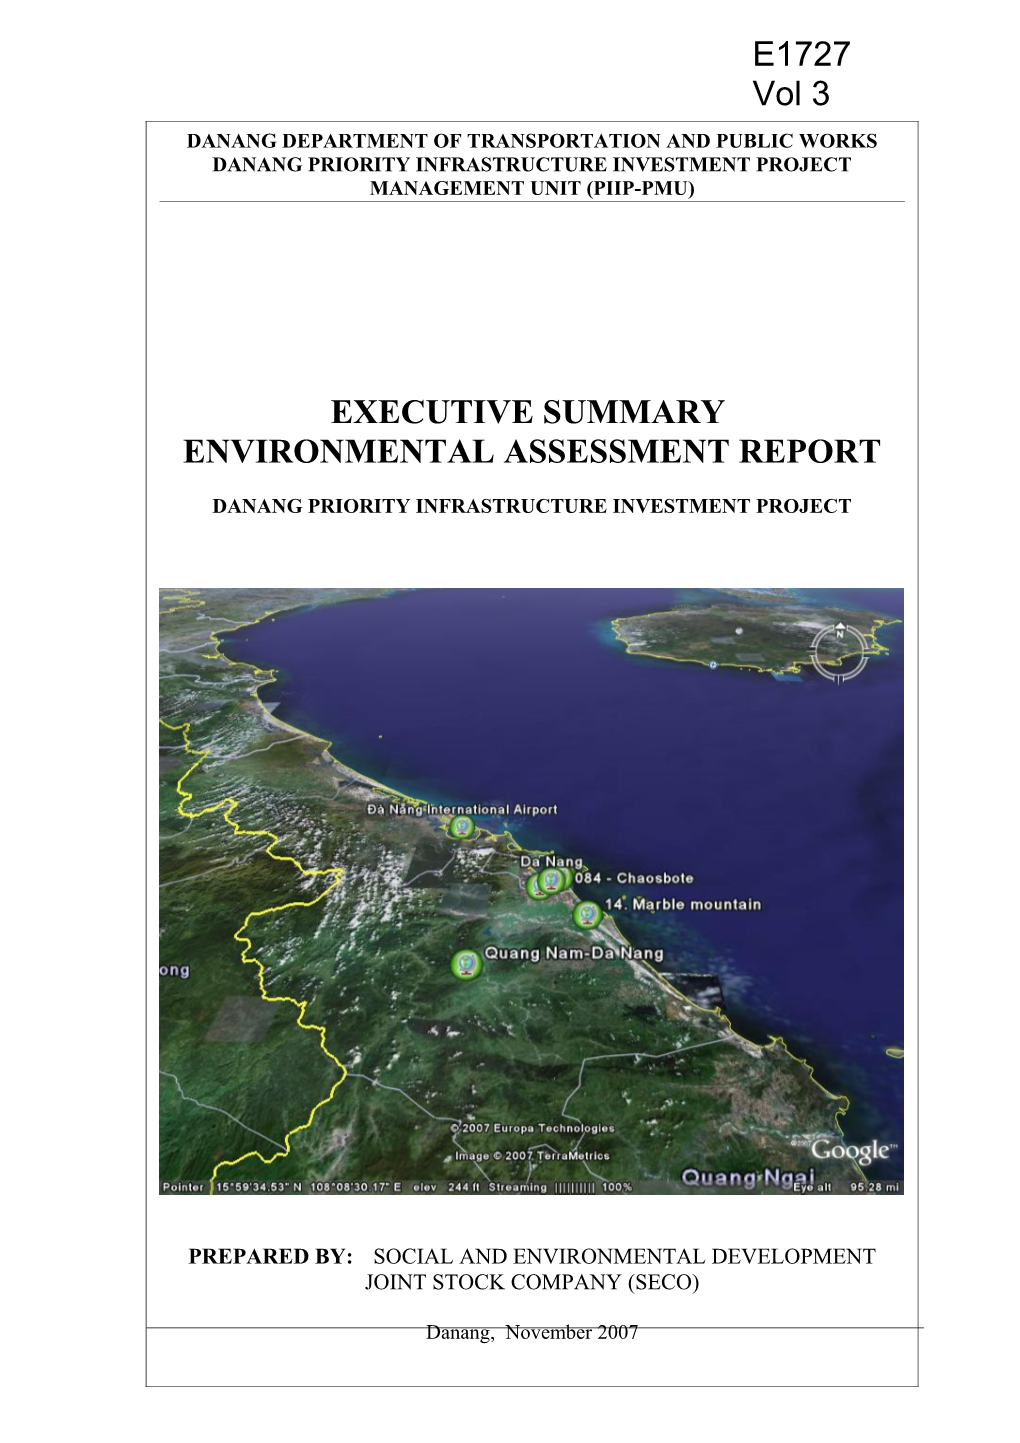 Executive Summary Environmental Assessment